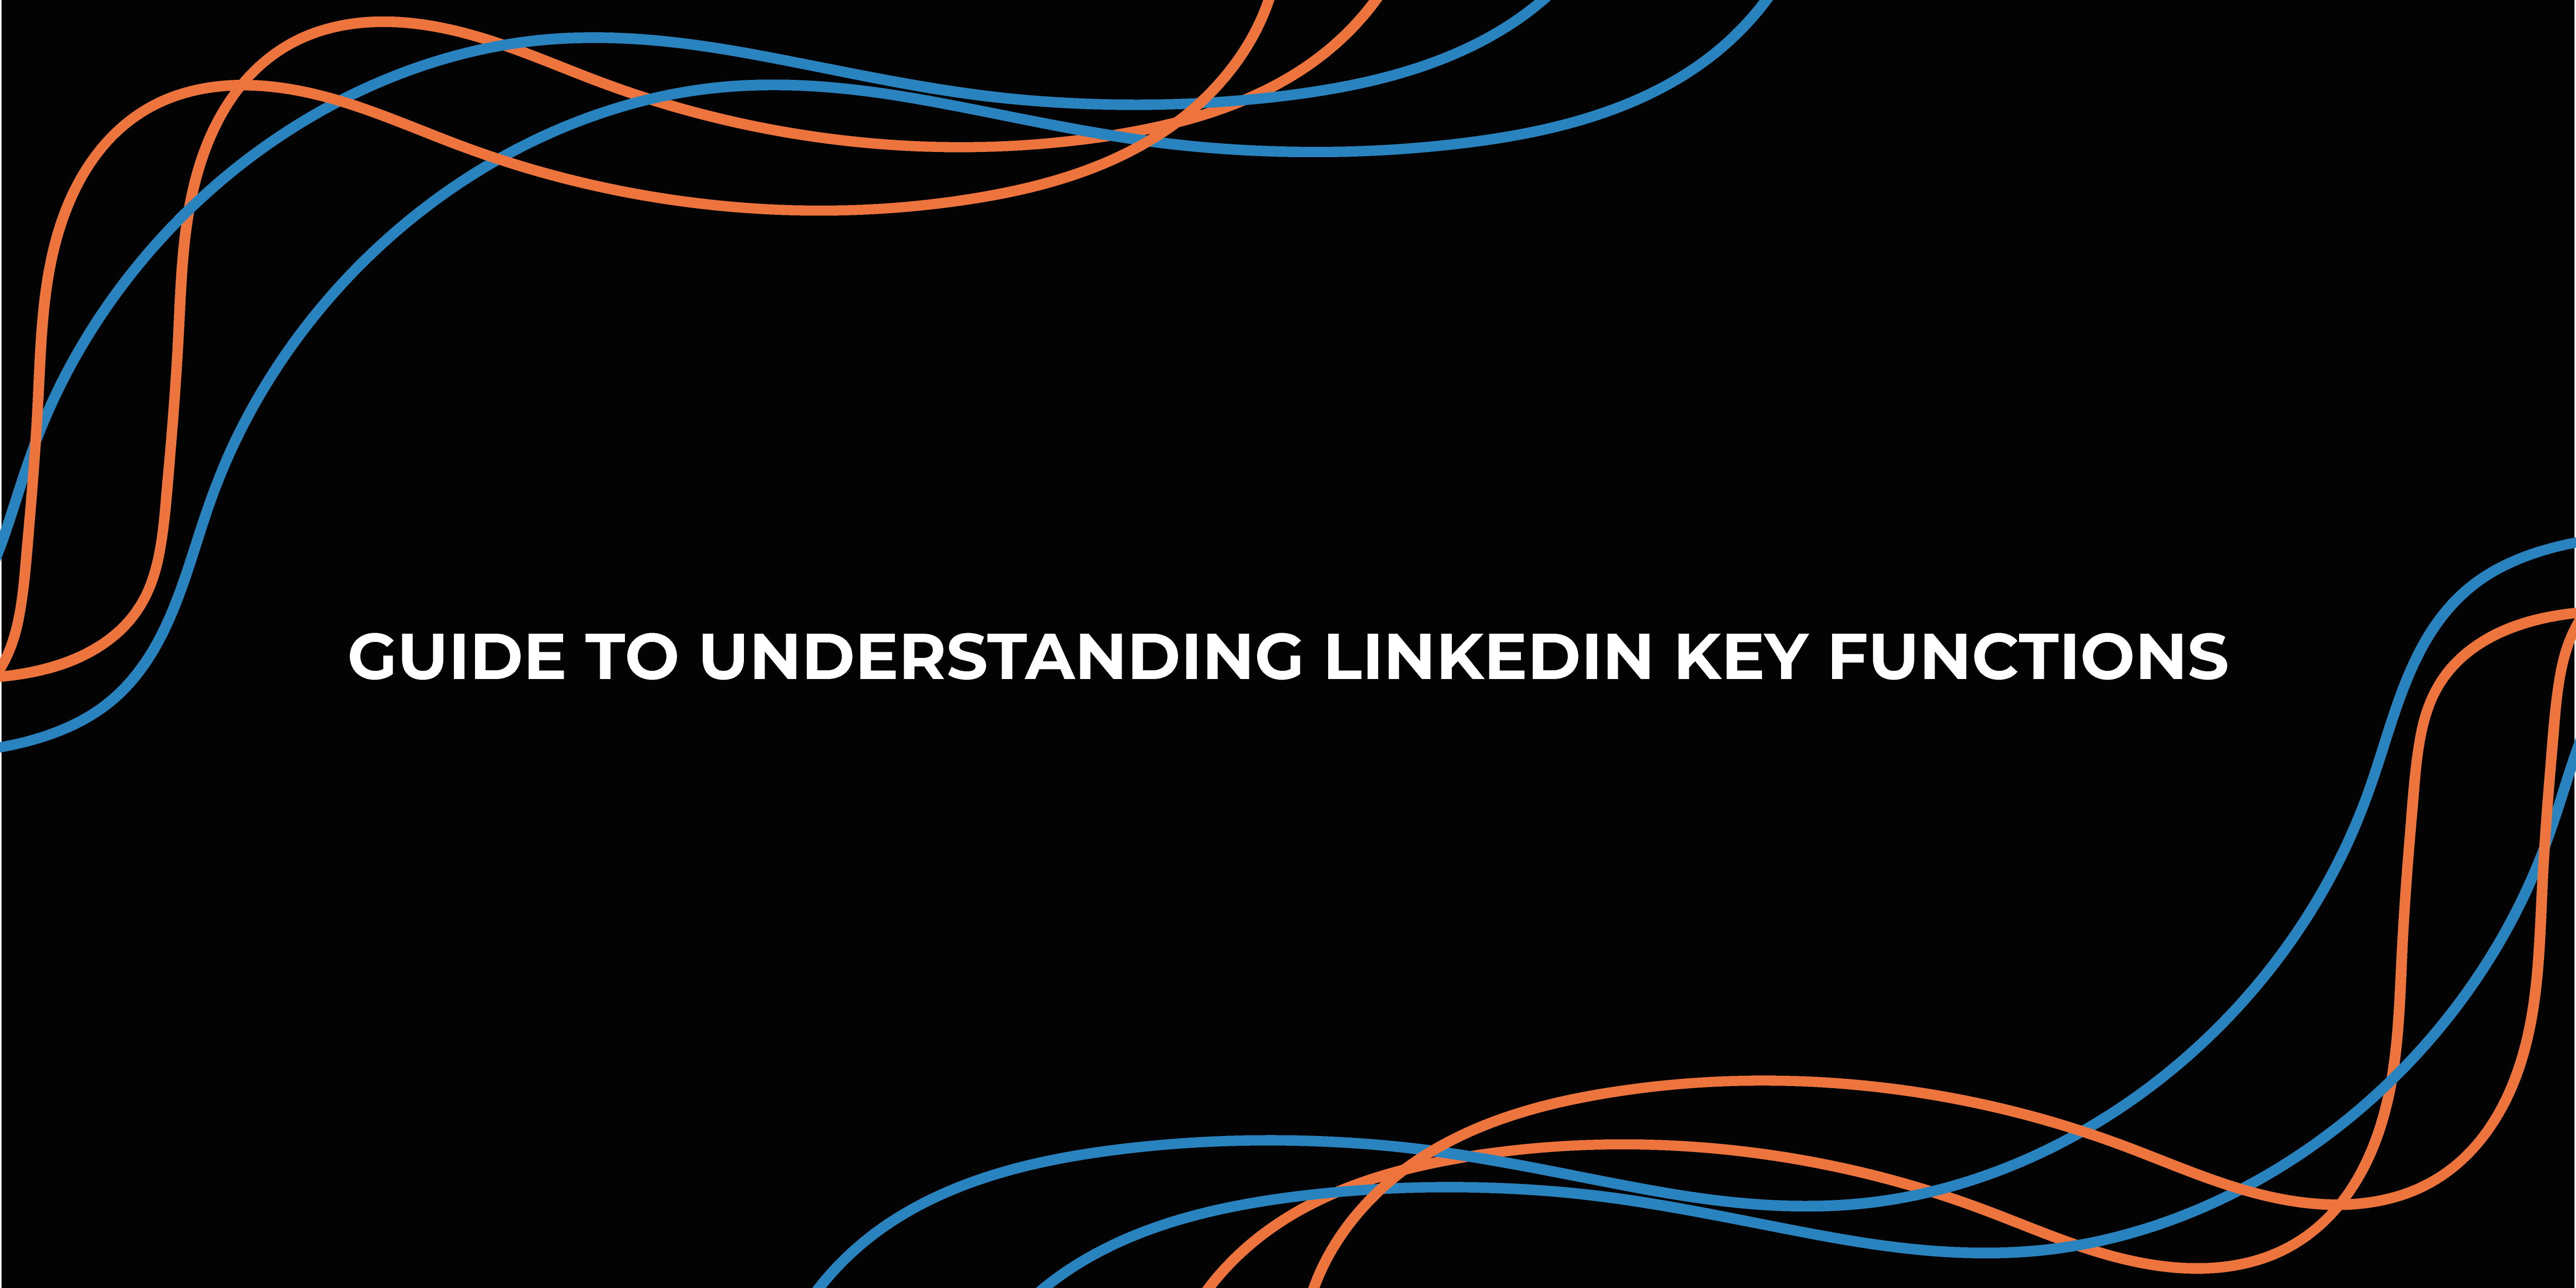 Guide to Understanding LinkedIn Key Functions